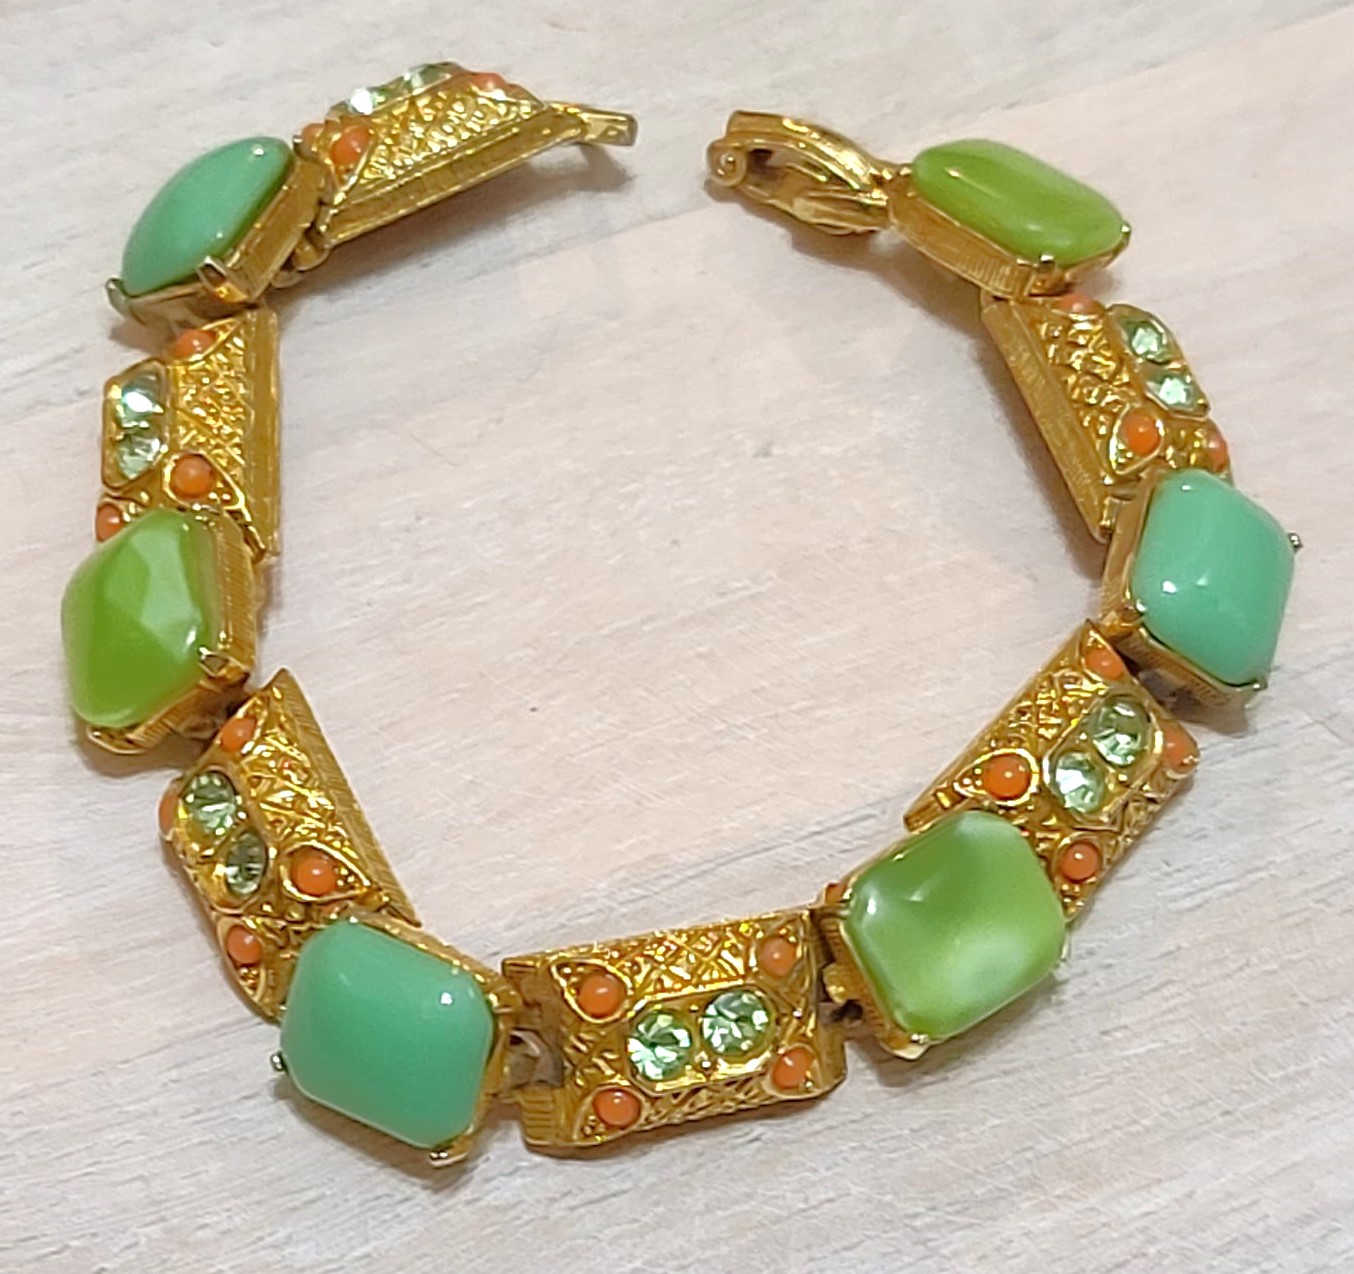 Green cabachon bracelet, vintage with orange cabachons, rhinestones, signed designerr ART